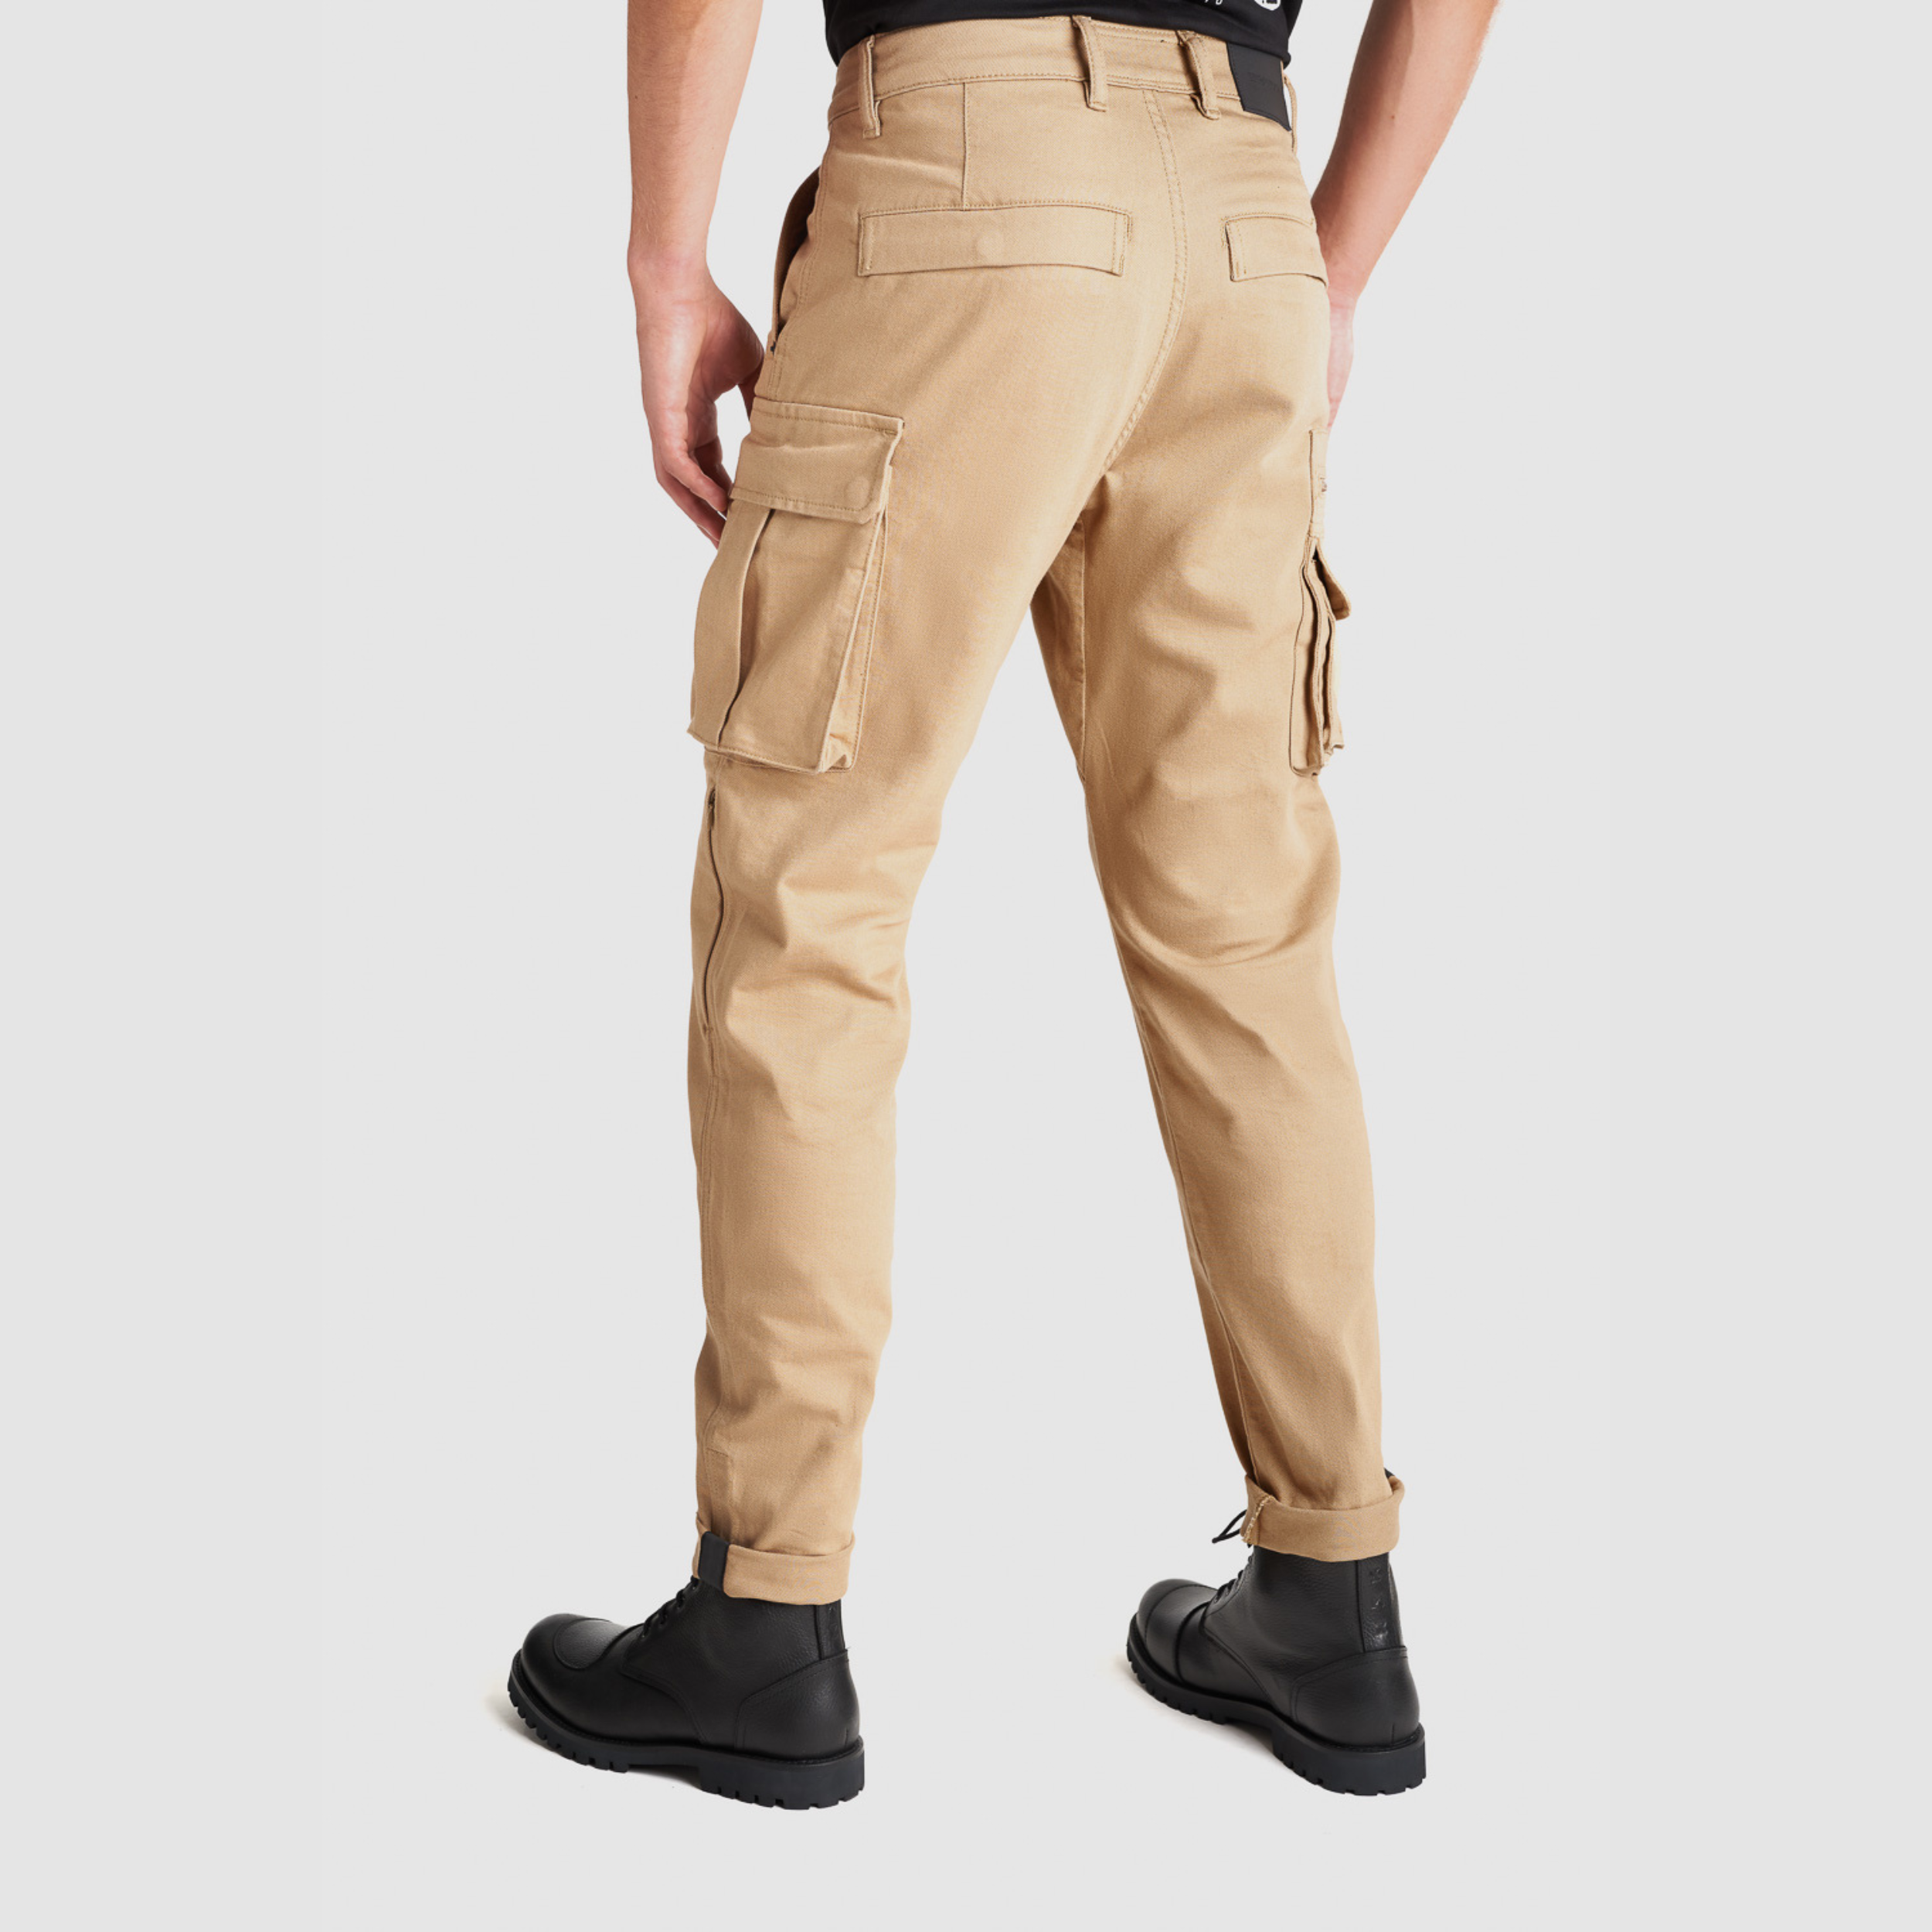 Pando Moto Desert Cargo Jeans, Length 30 - Beige